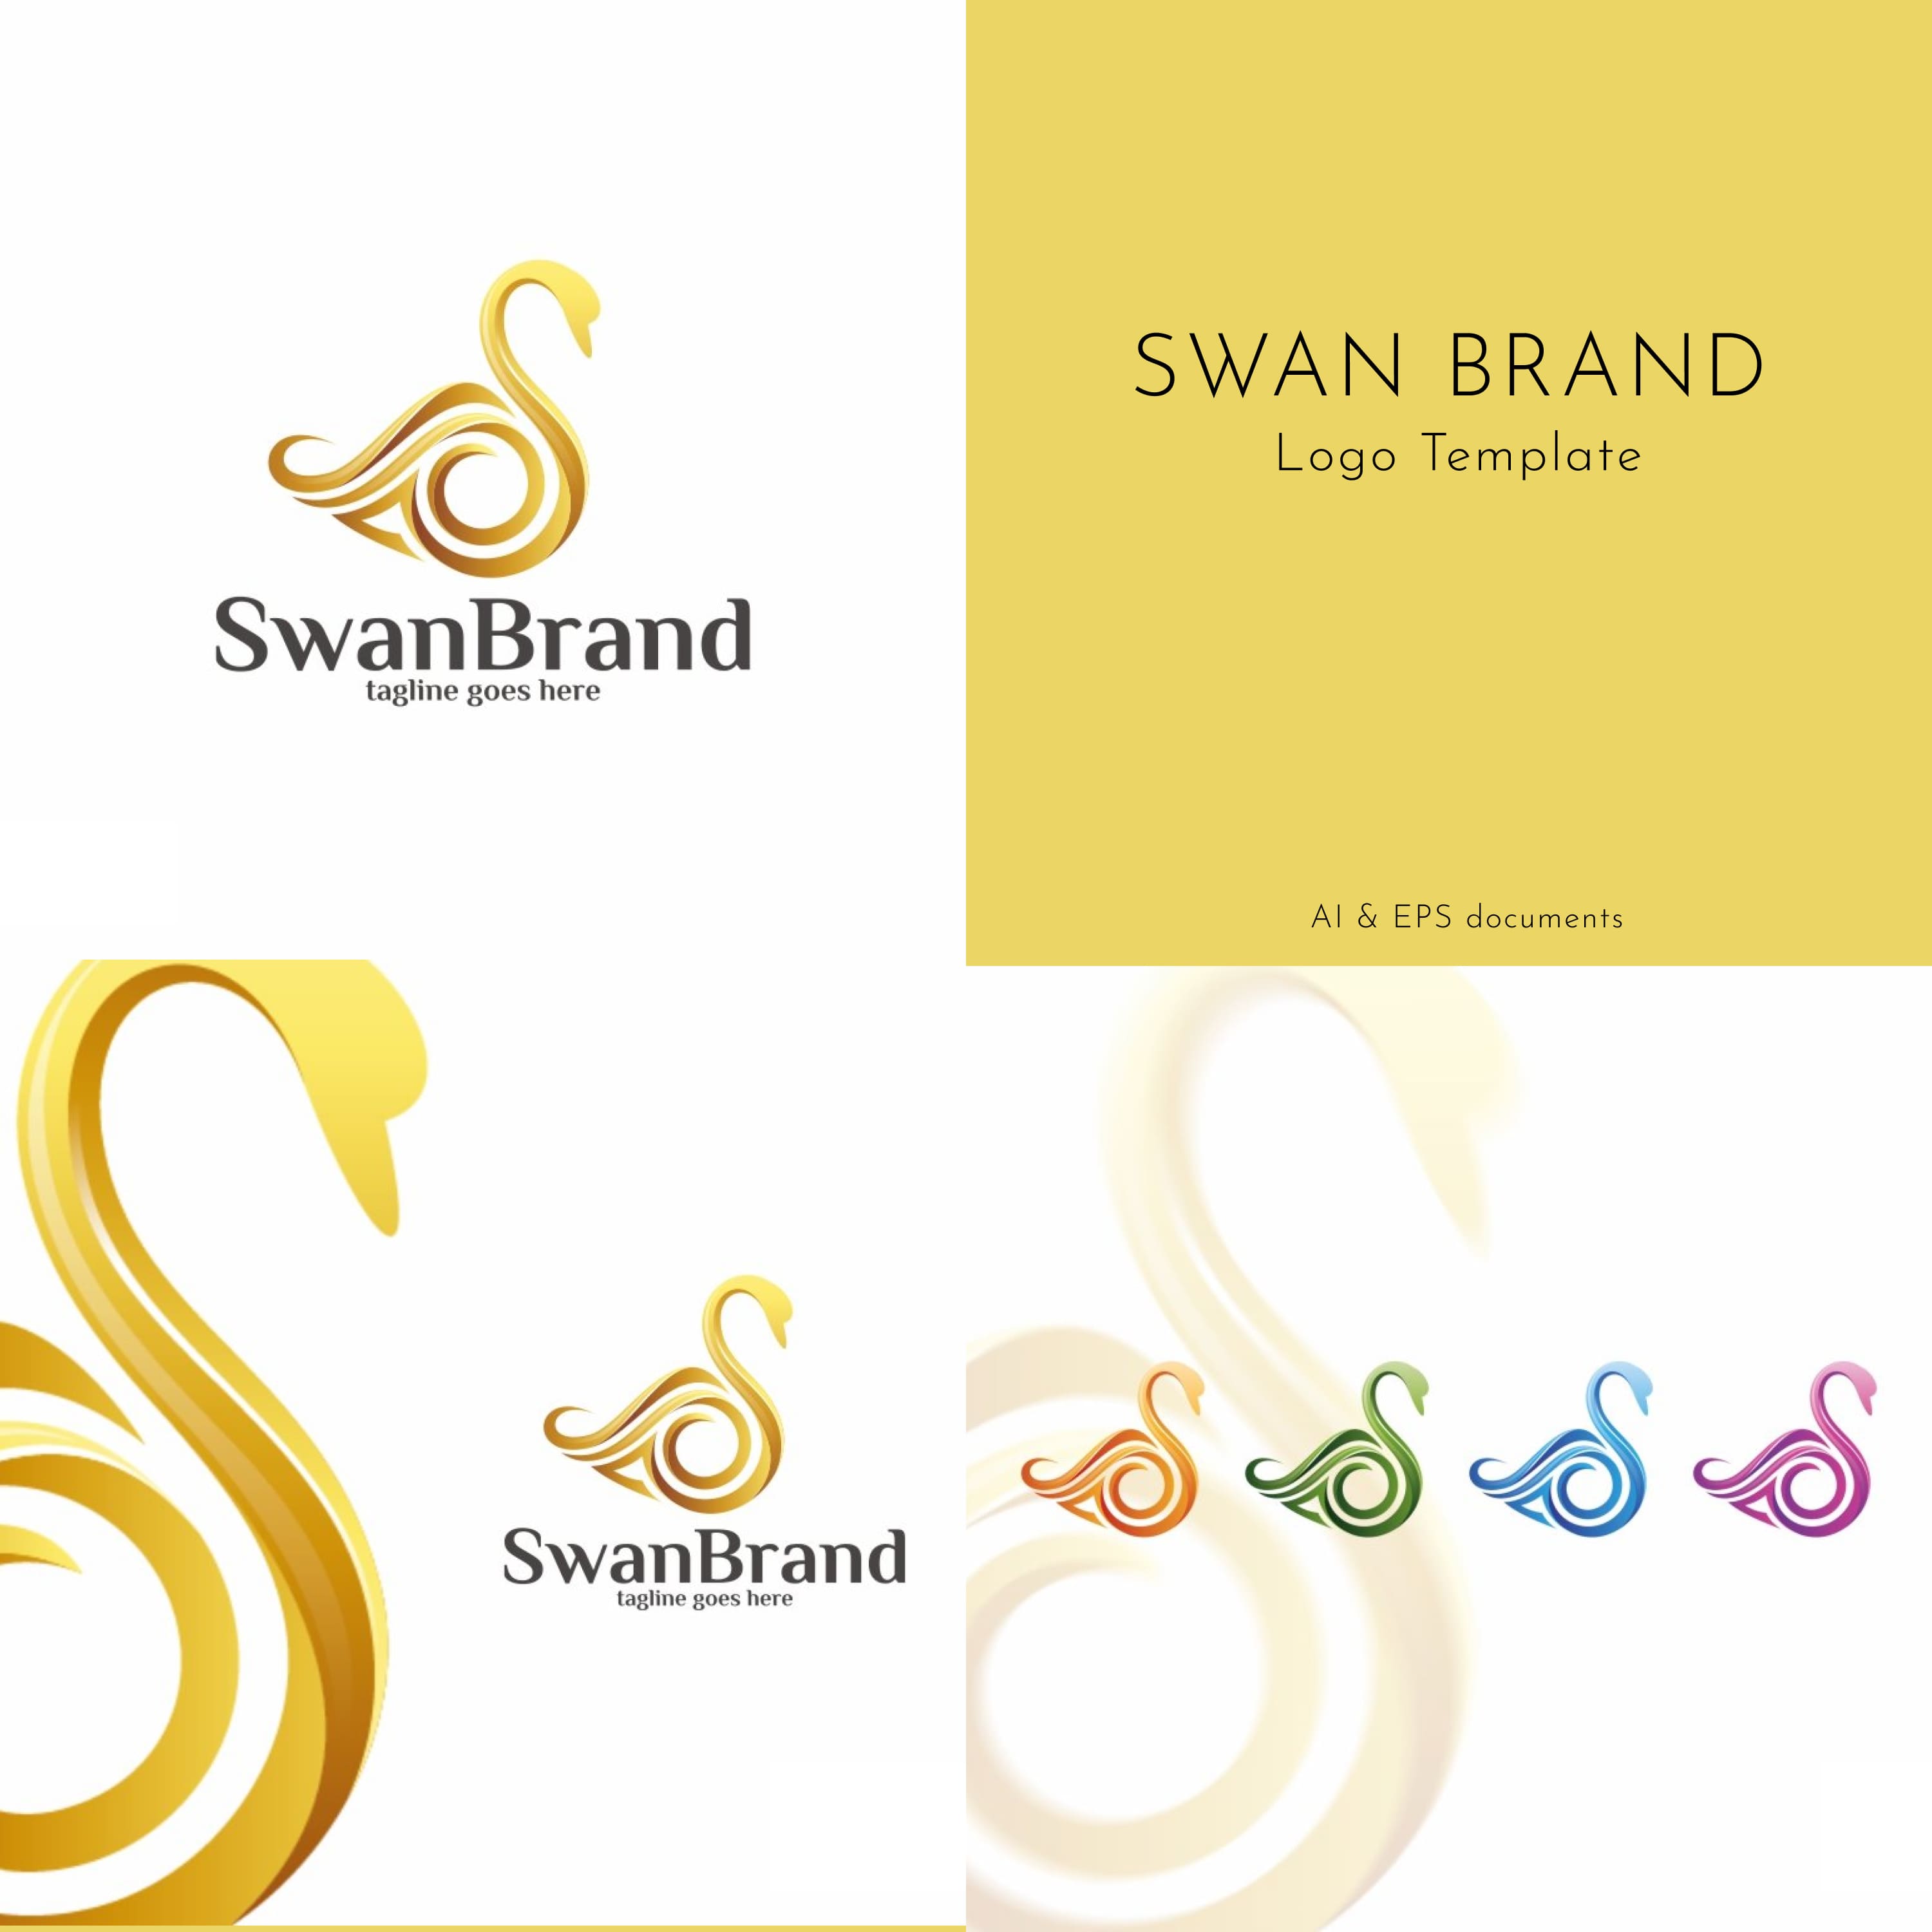 Swan Brand - Logo Template cover.